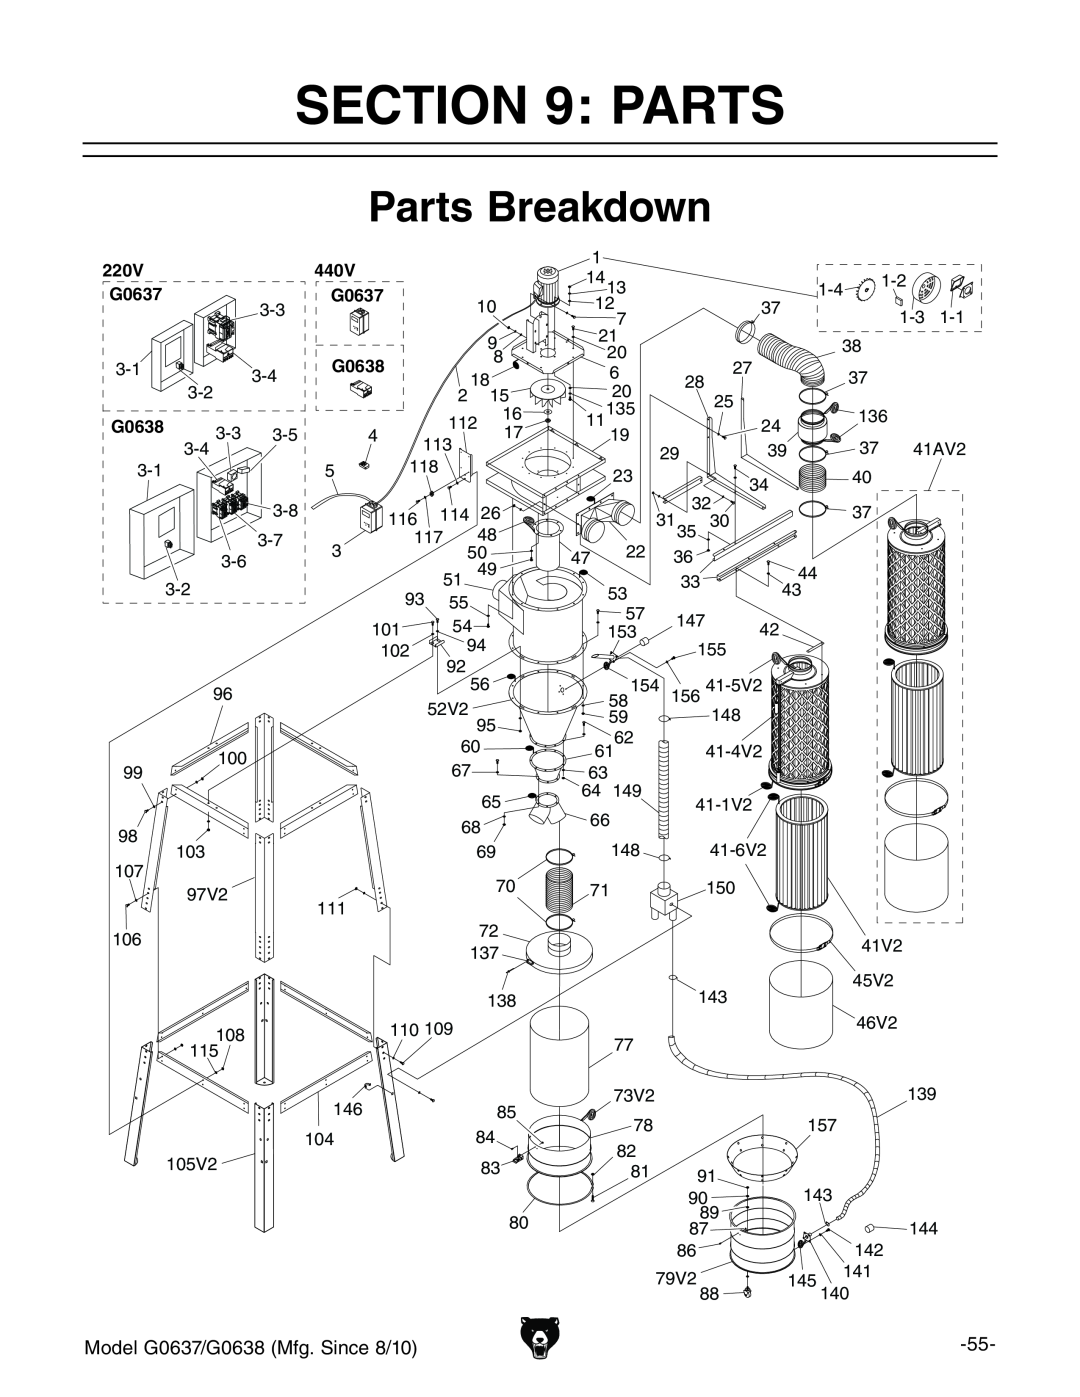 Grizzly G0637 owner manual Parts Breakdown, BdYZa<%+,$<%+-B\#H^cXZ-$&% 